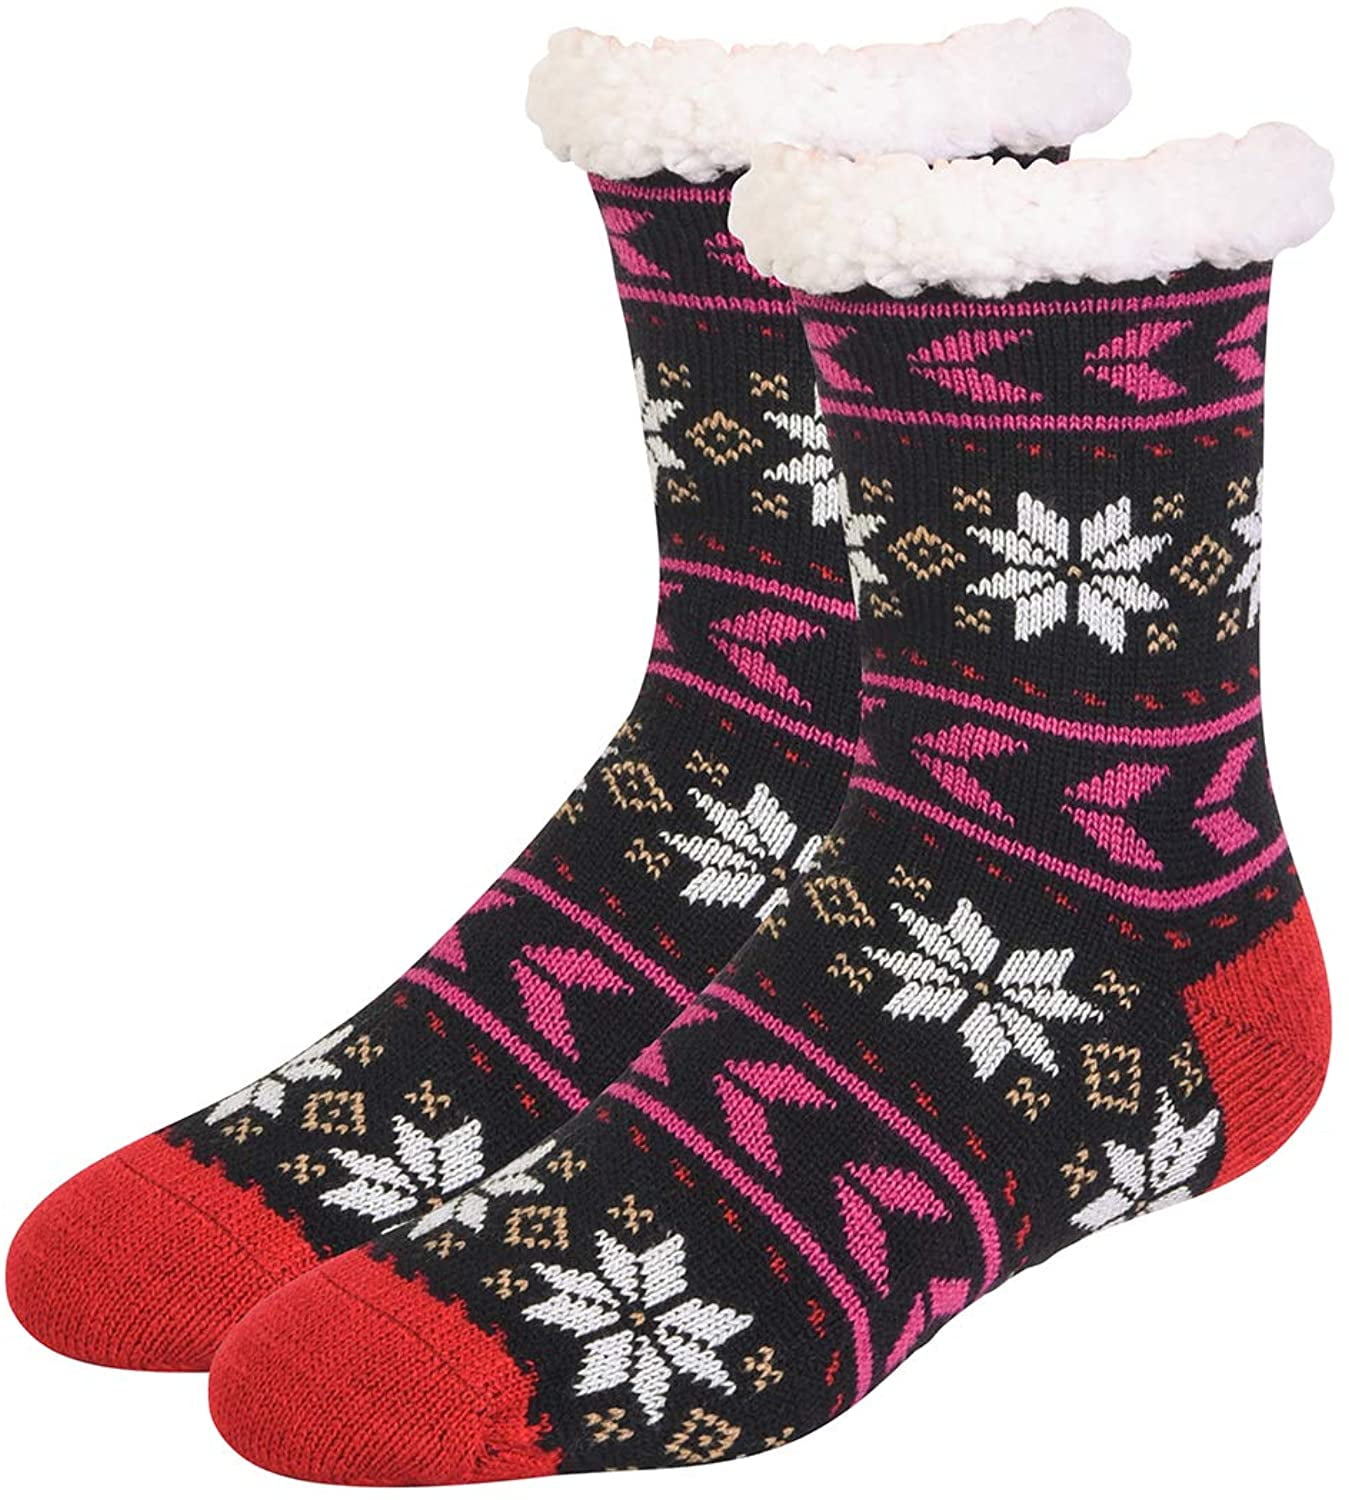 2 Pairs Women's Christmas Cozy Slipper Ankle Socks Shoe Size 4-10 Snowman 